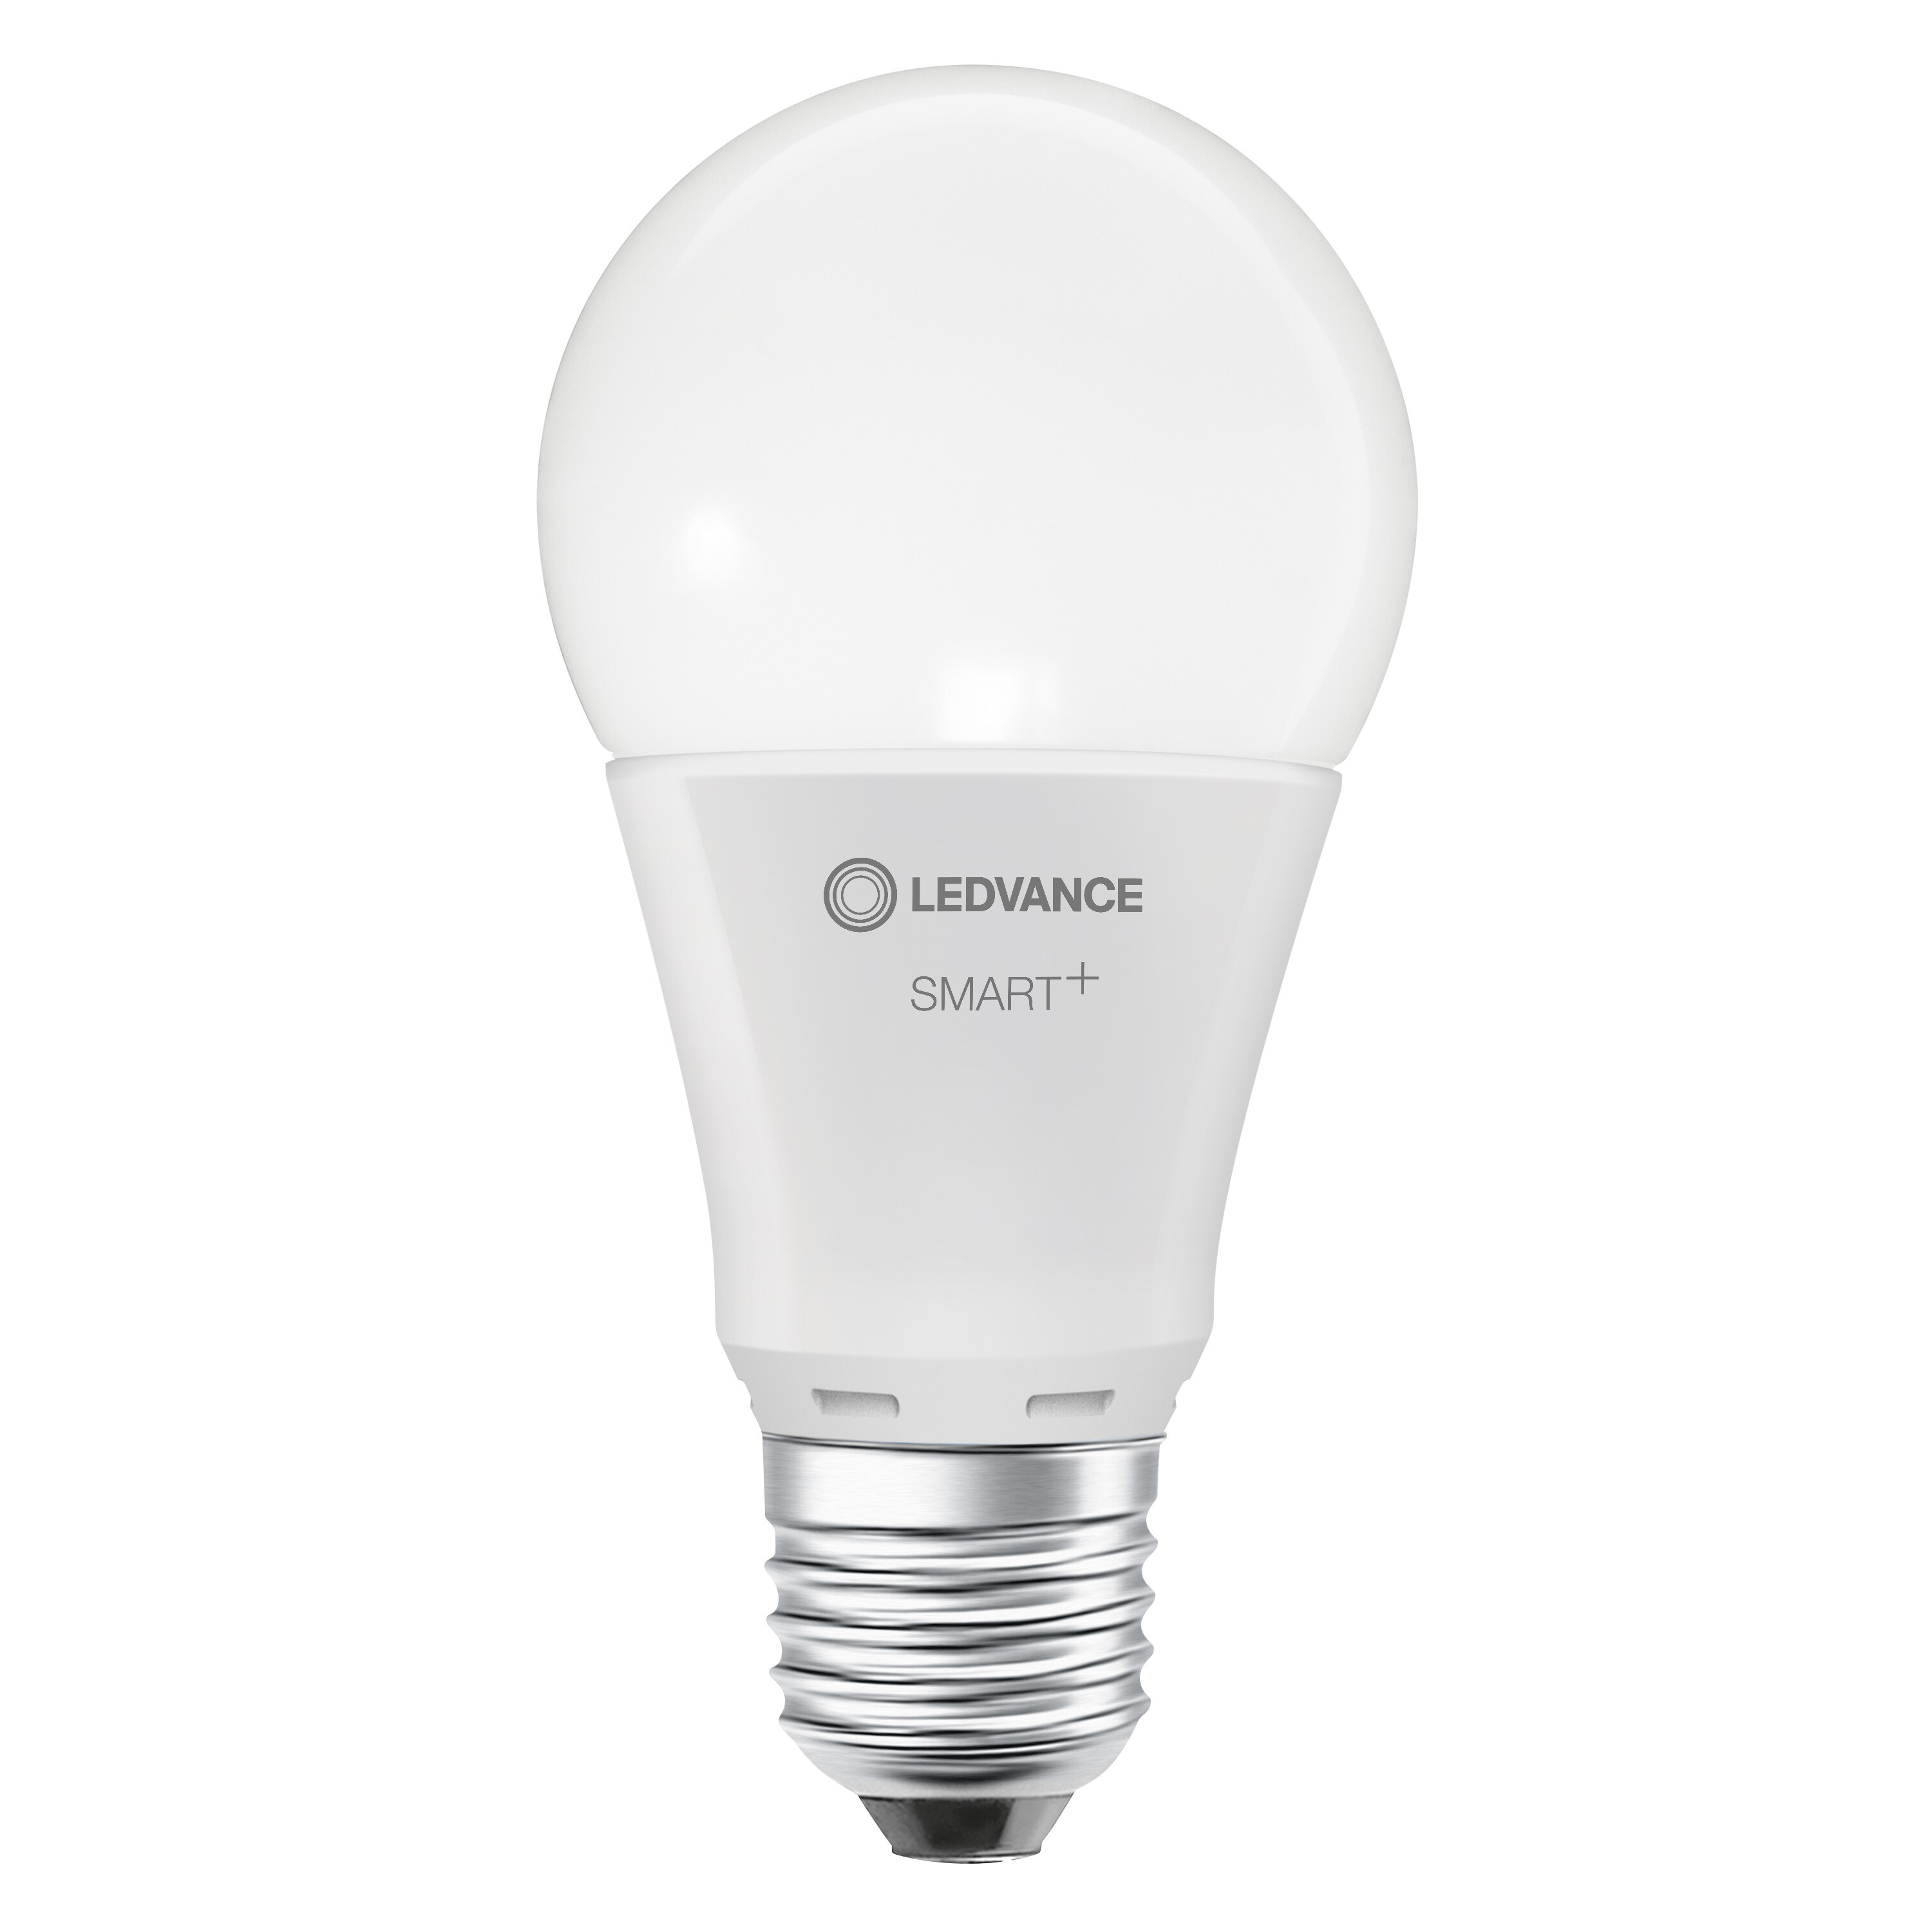 Warmweiß Lampe LED Classic SMART+ Smarte WiFi Dimmable LEDVANCE